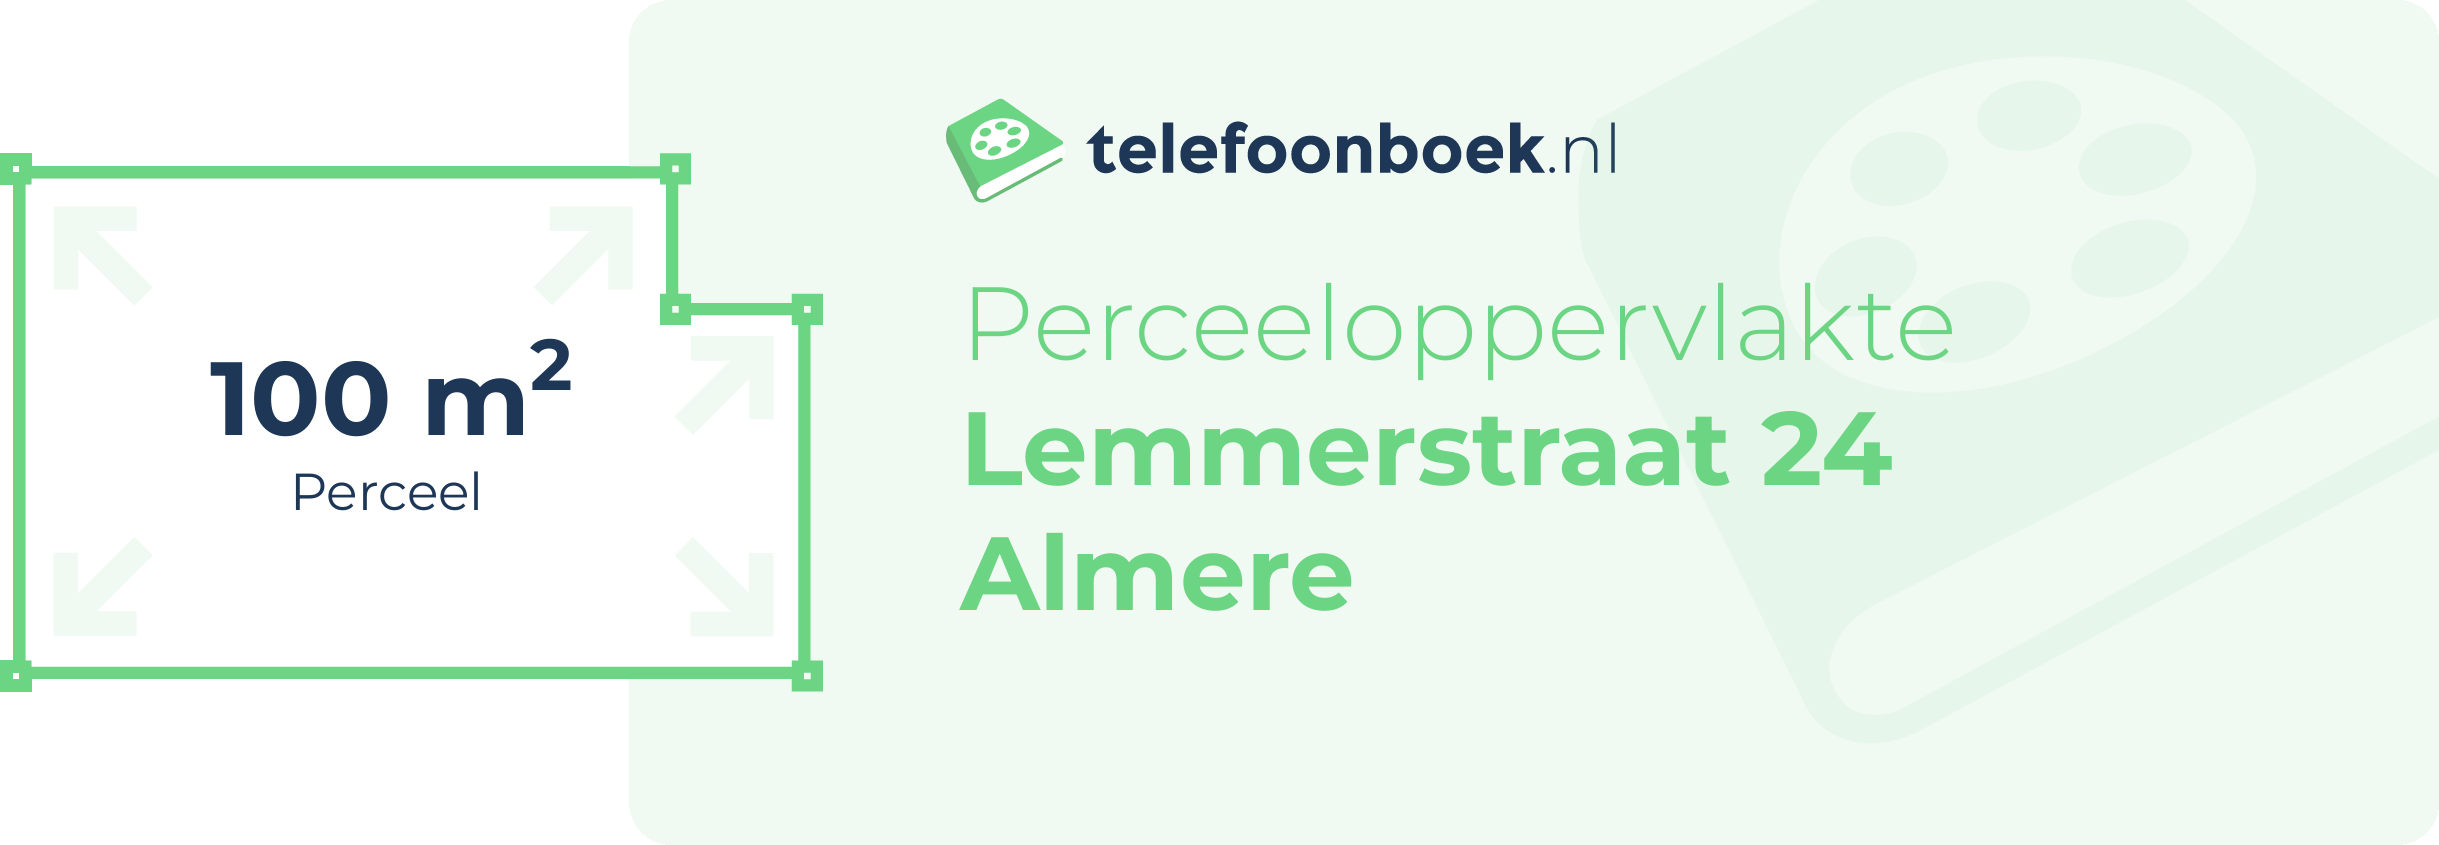 Perceeloppervlakte Lemmerstraat 24 Almere